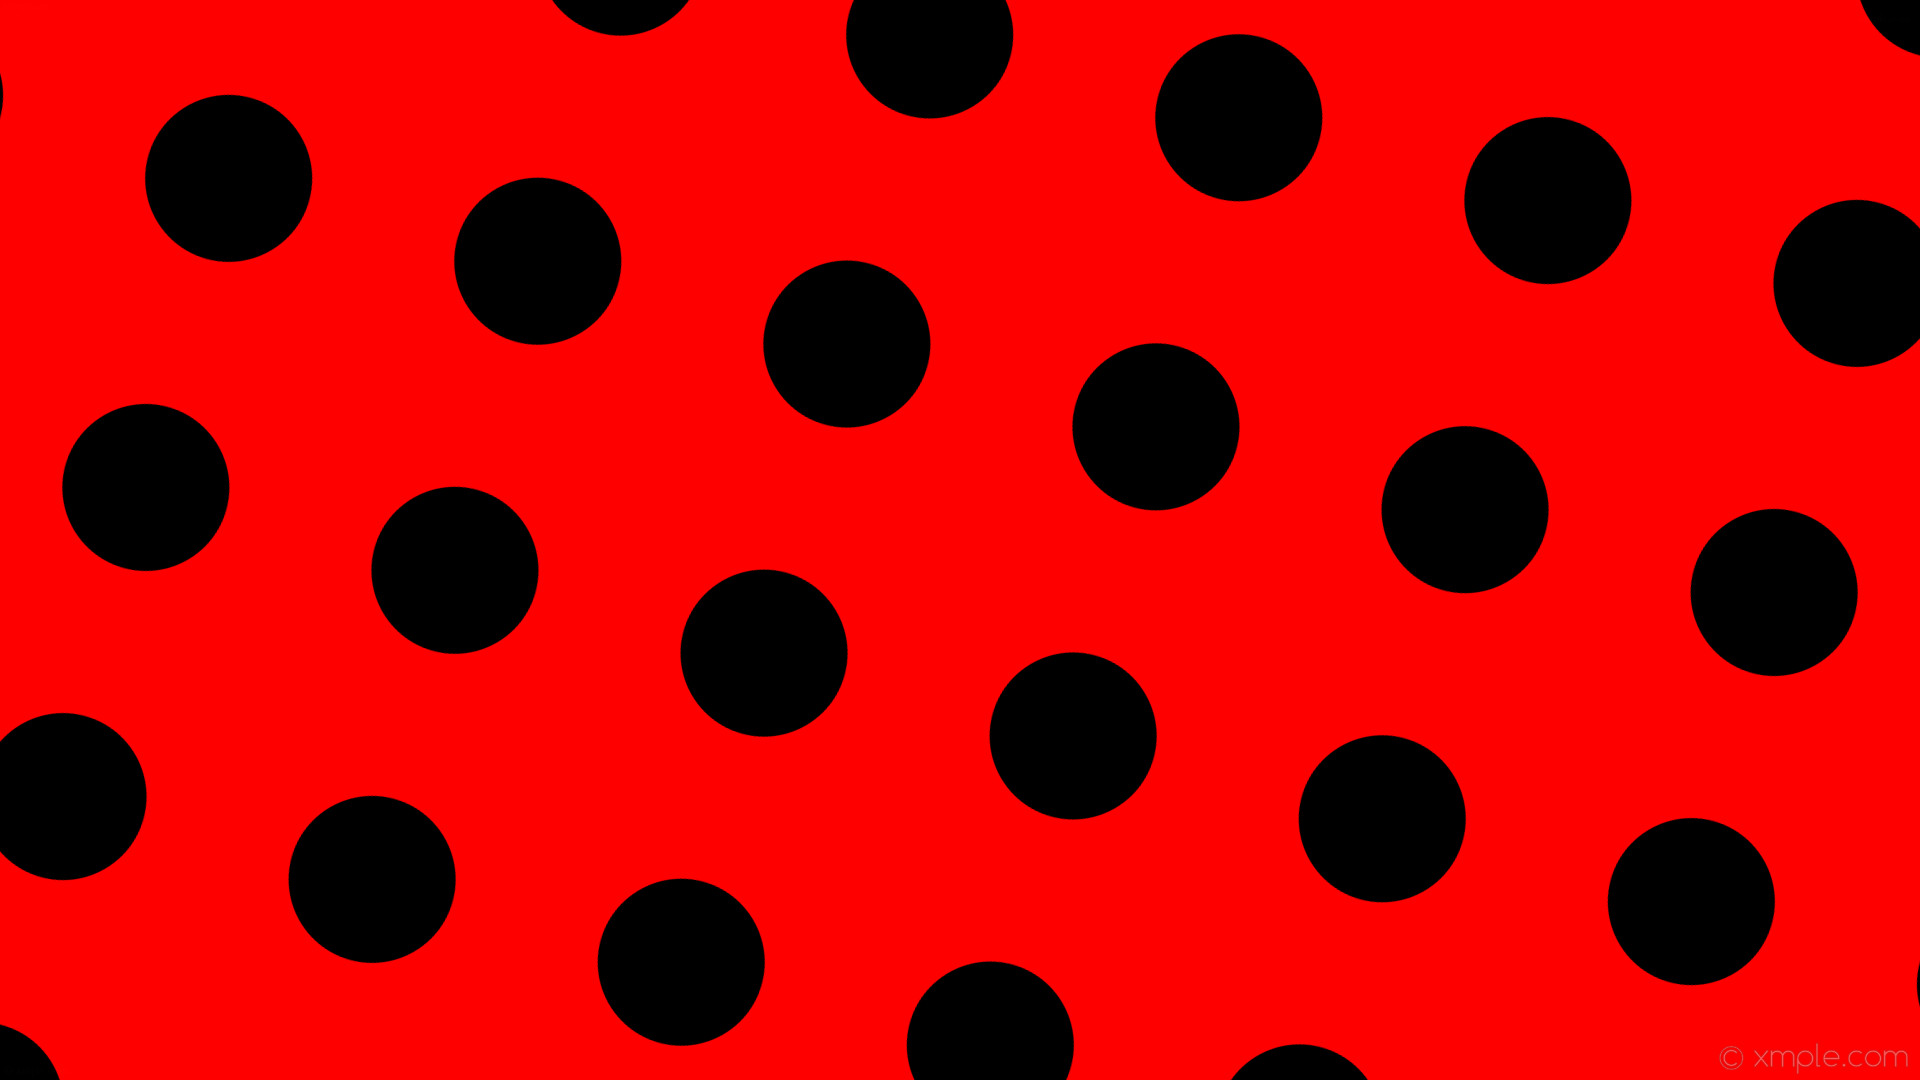 Wallpaper dots red polka black spots #ff0000 255 167px 320px